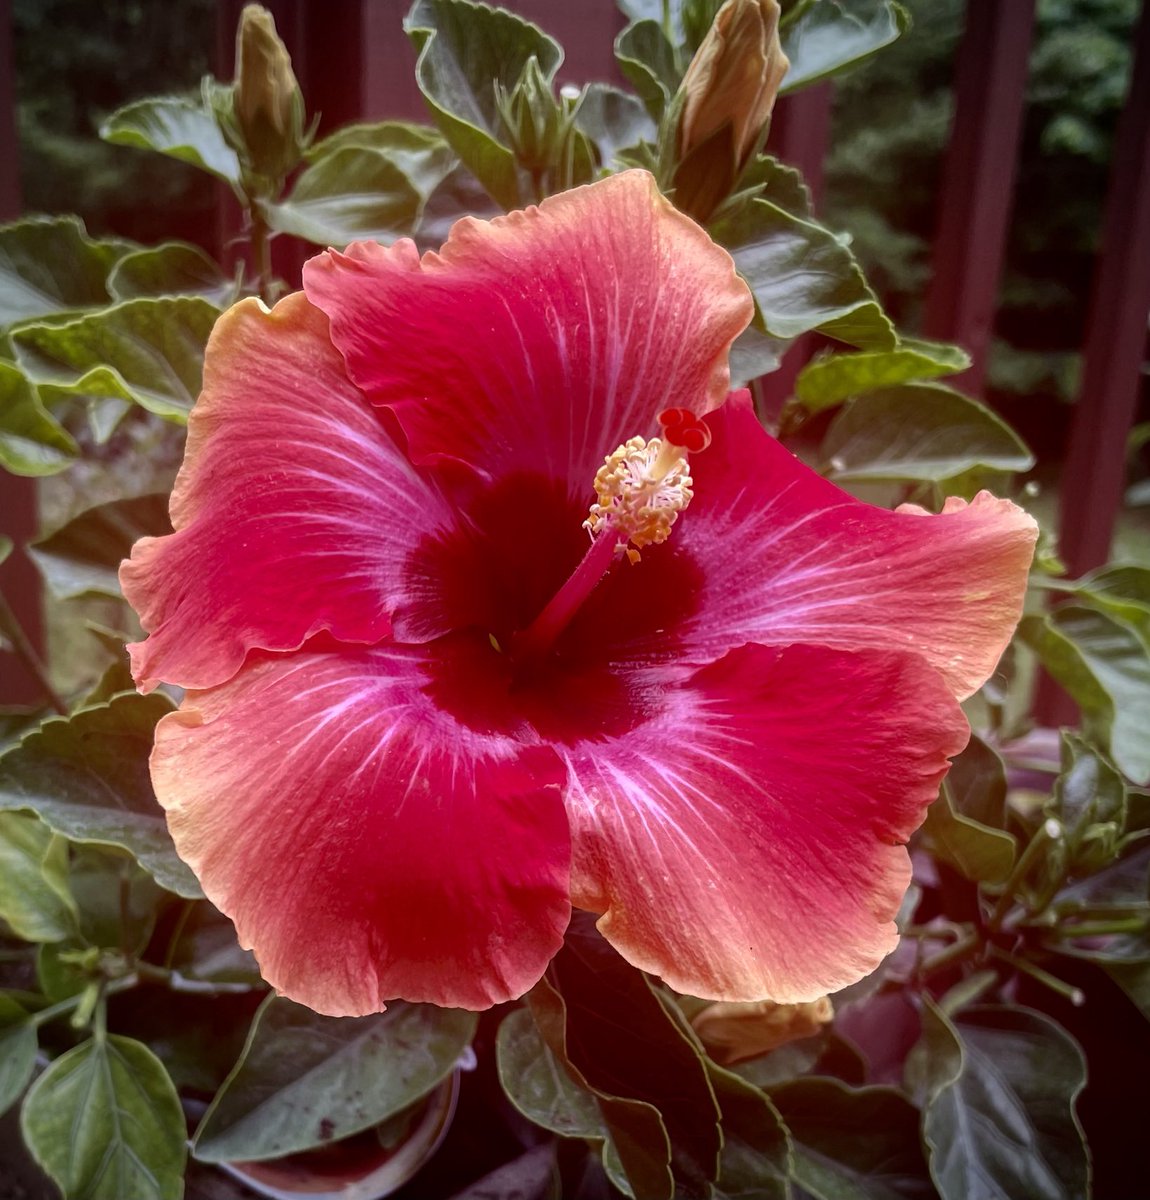 Hibiscus, so beautiful it’s almost obscene…